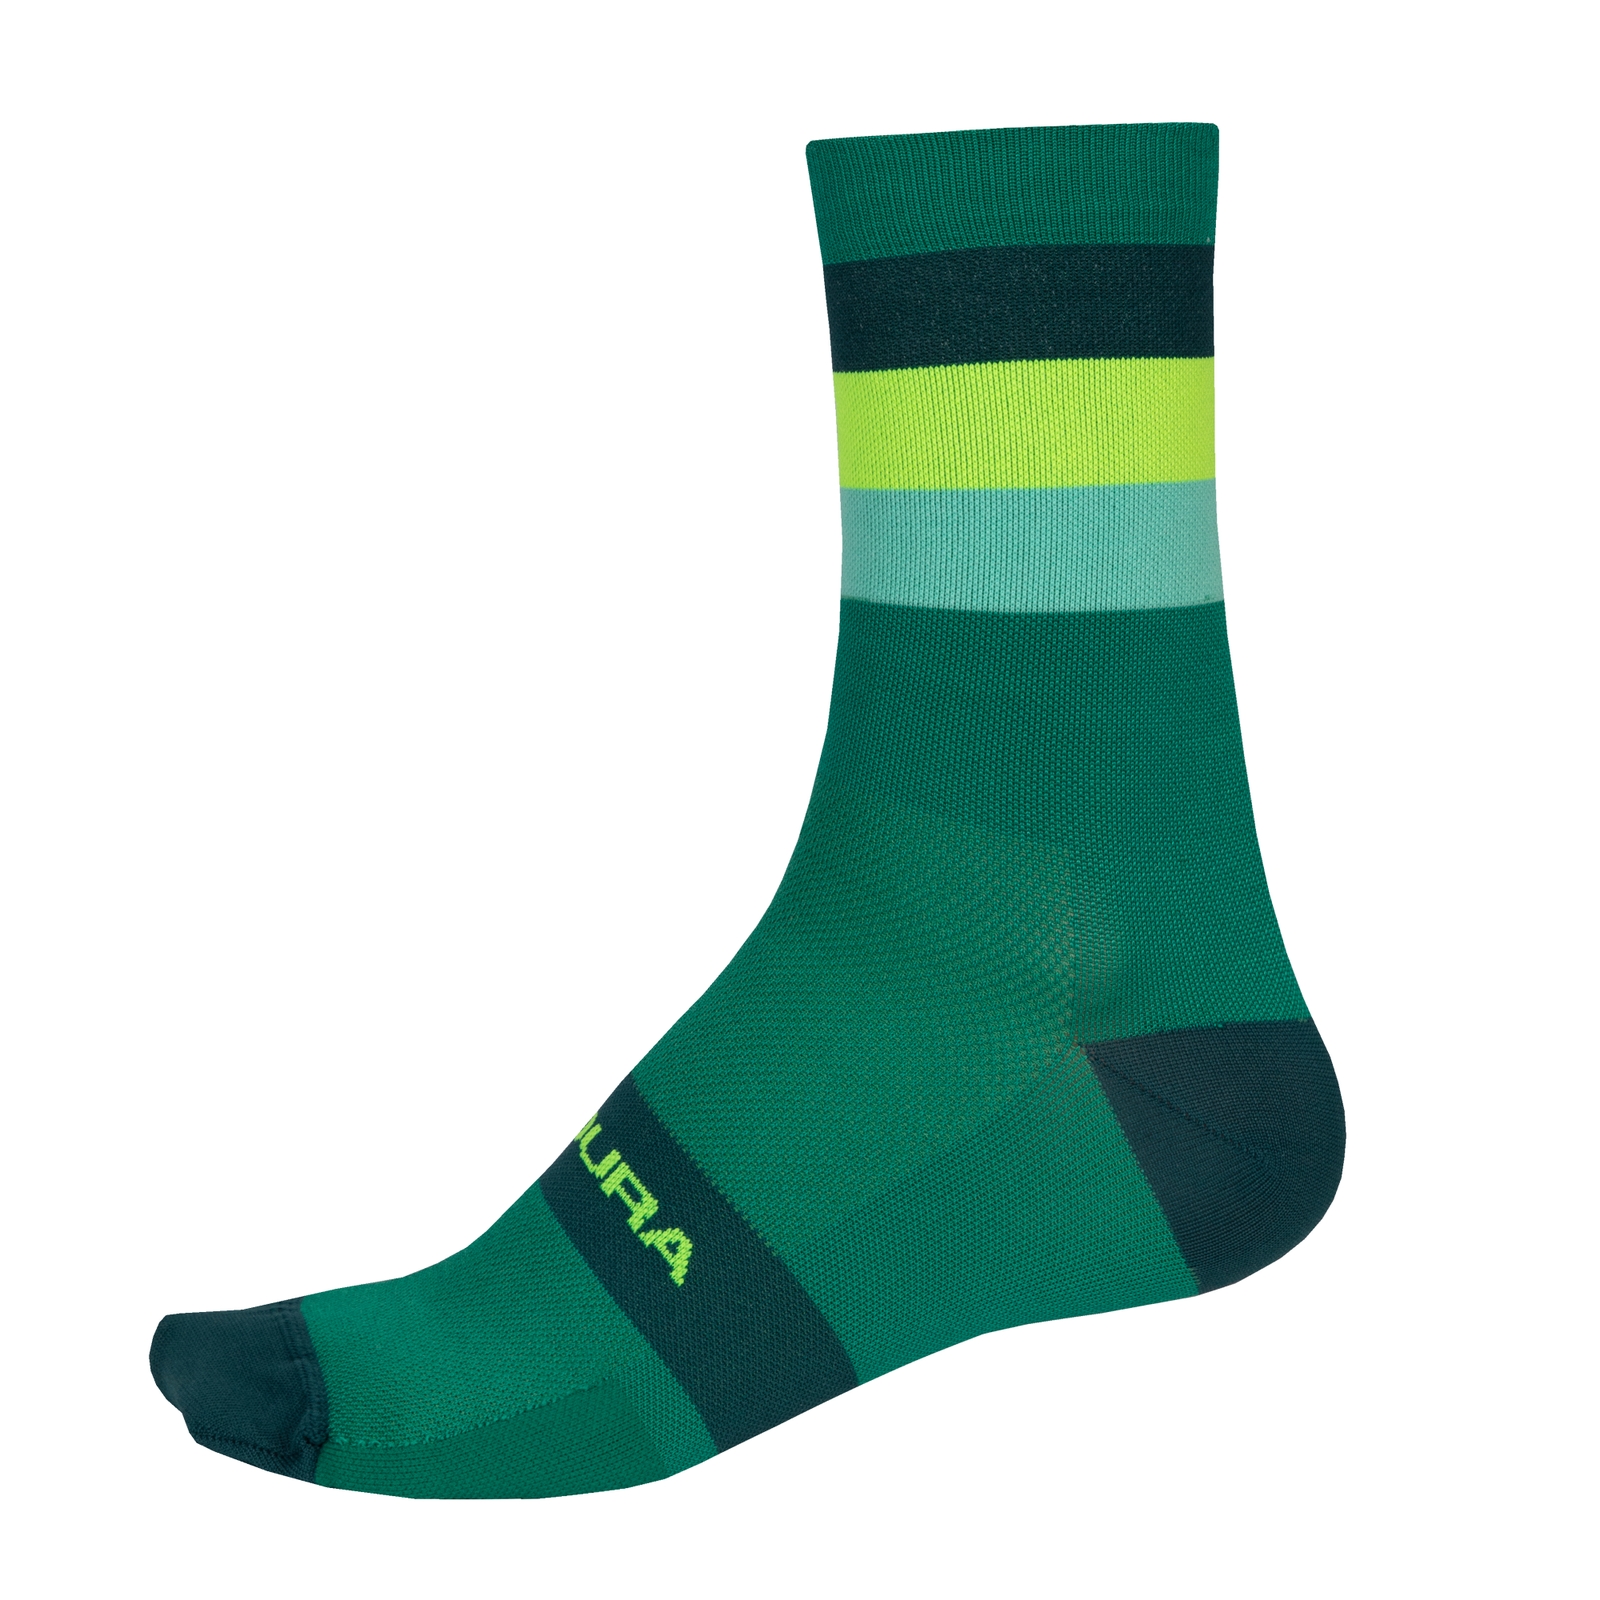 Endura Men's Bandwidth Sock - Emerald Green